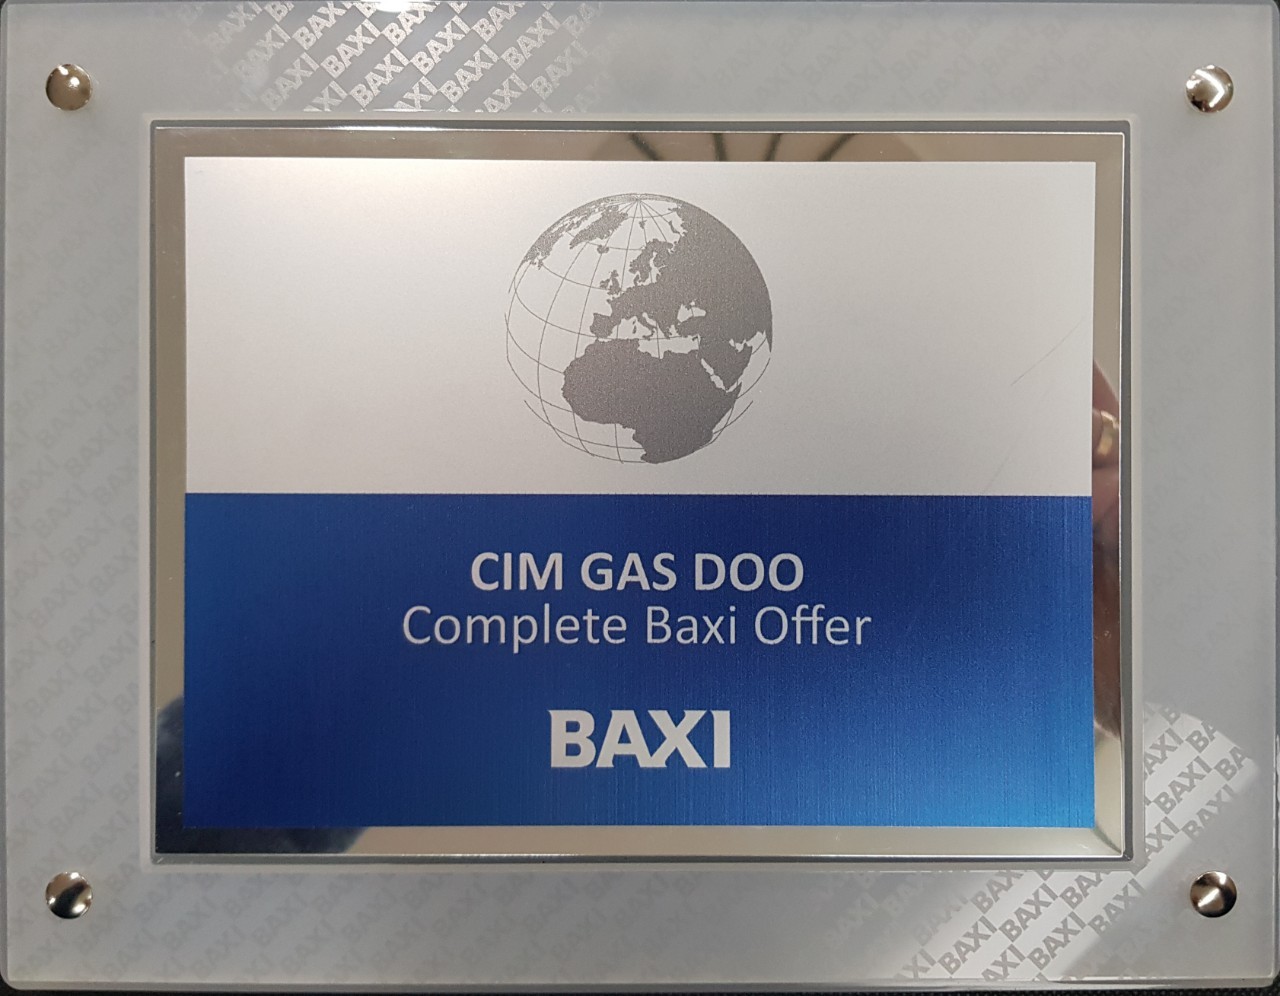 CIM GAS - BAXI Sales Award 2019